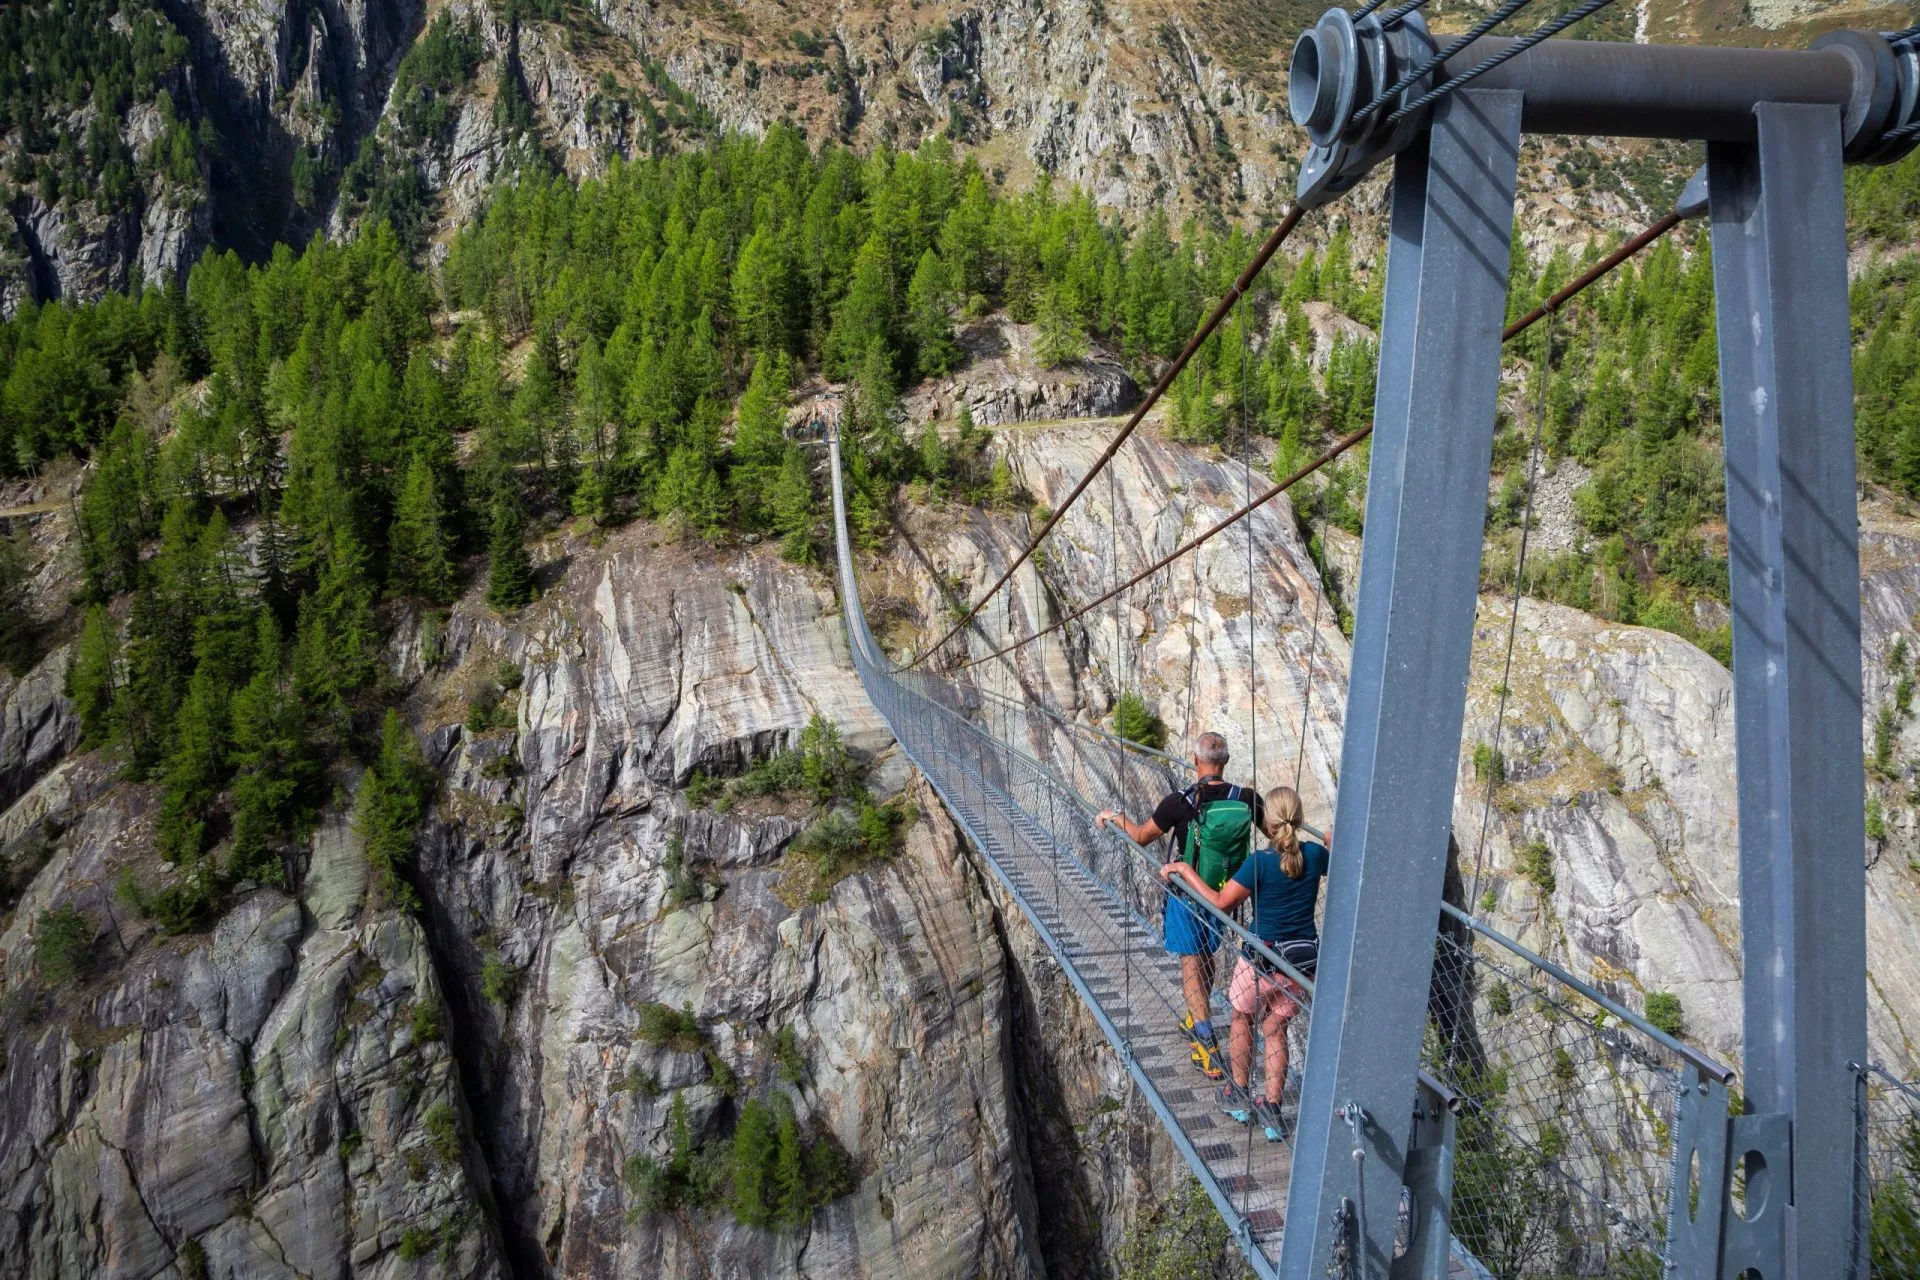 Hiking over the Aspi-Titter suspension bridge